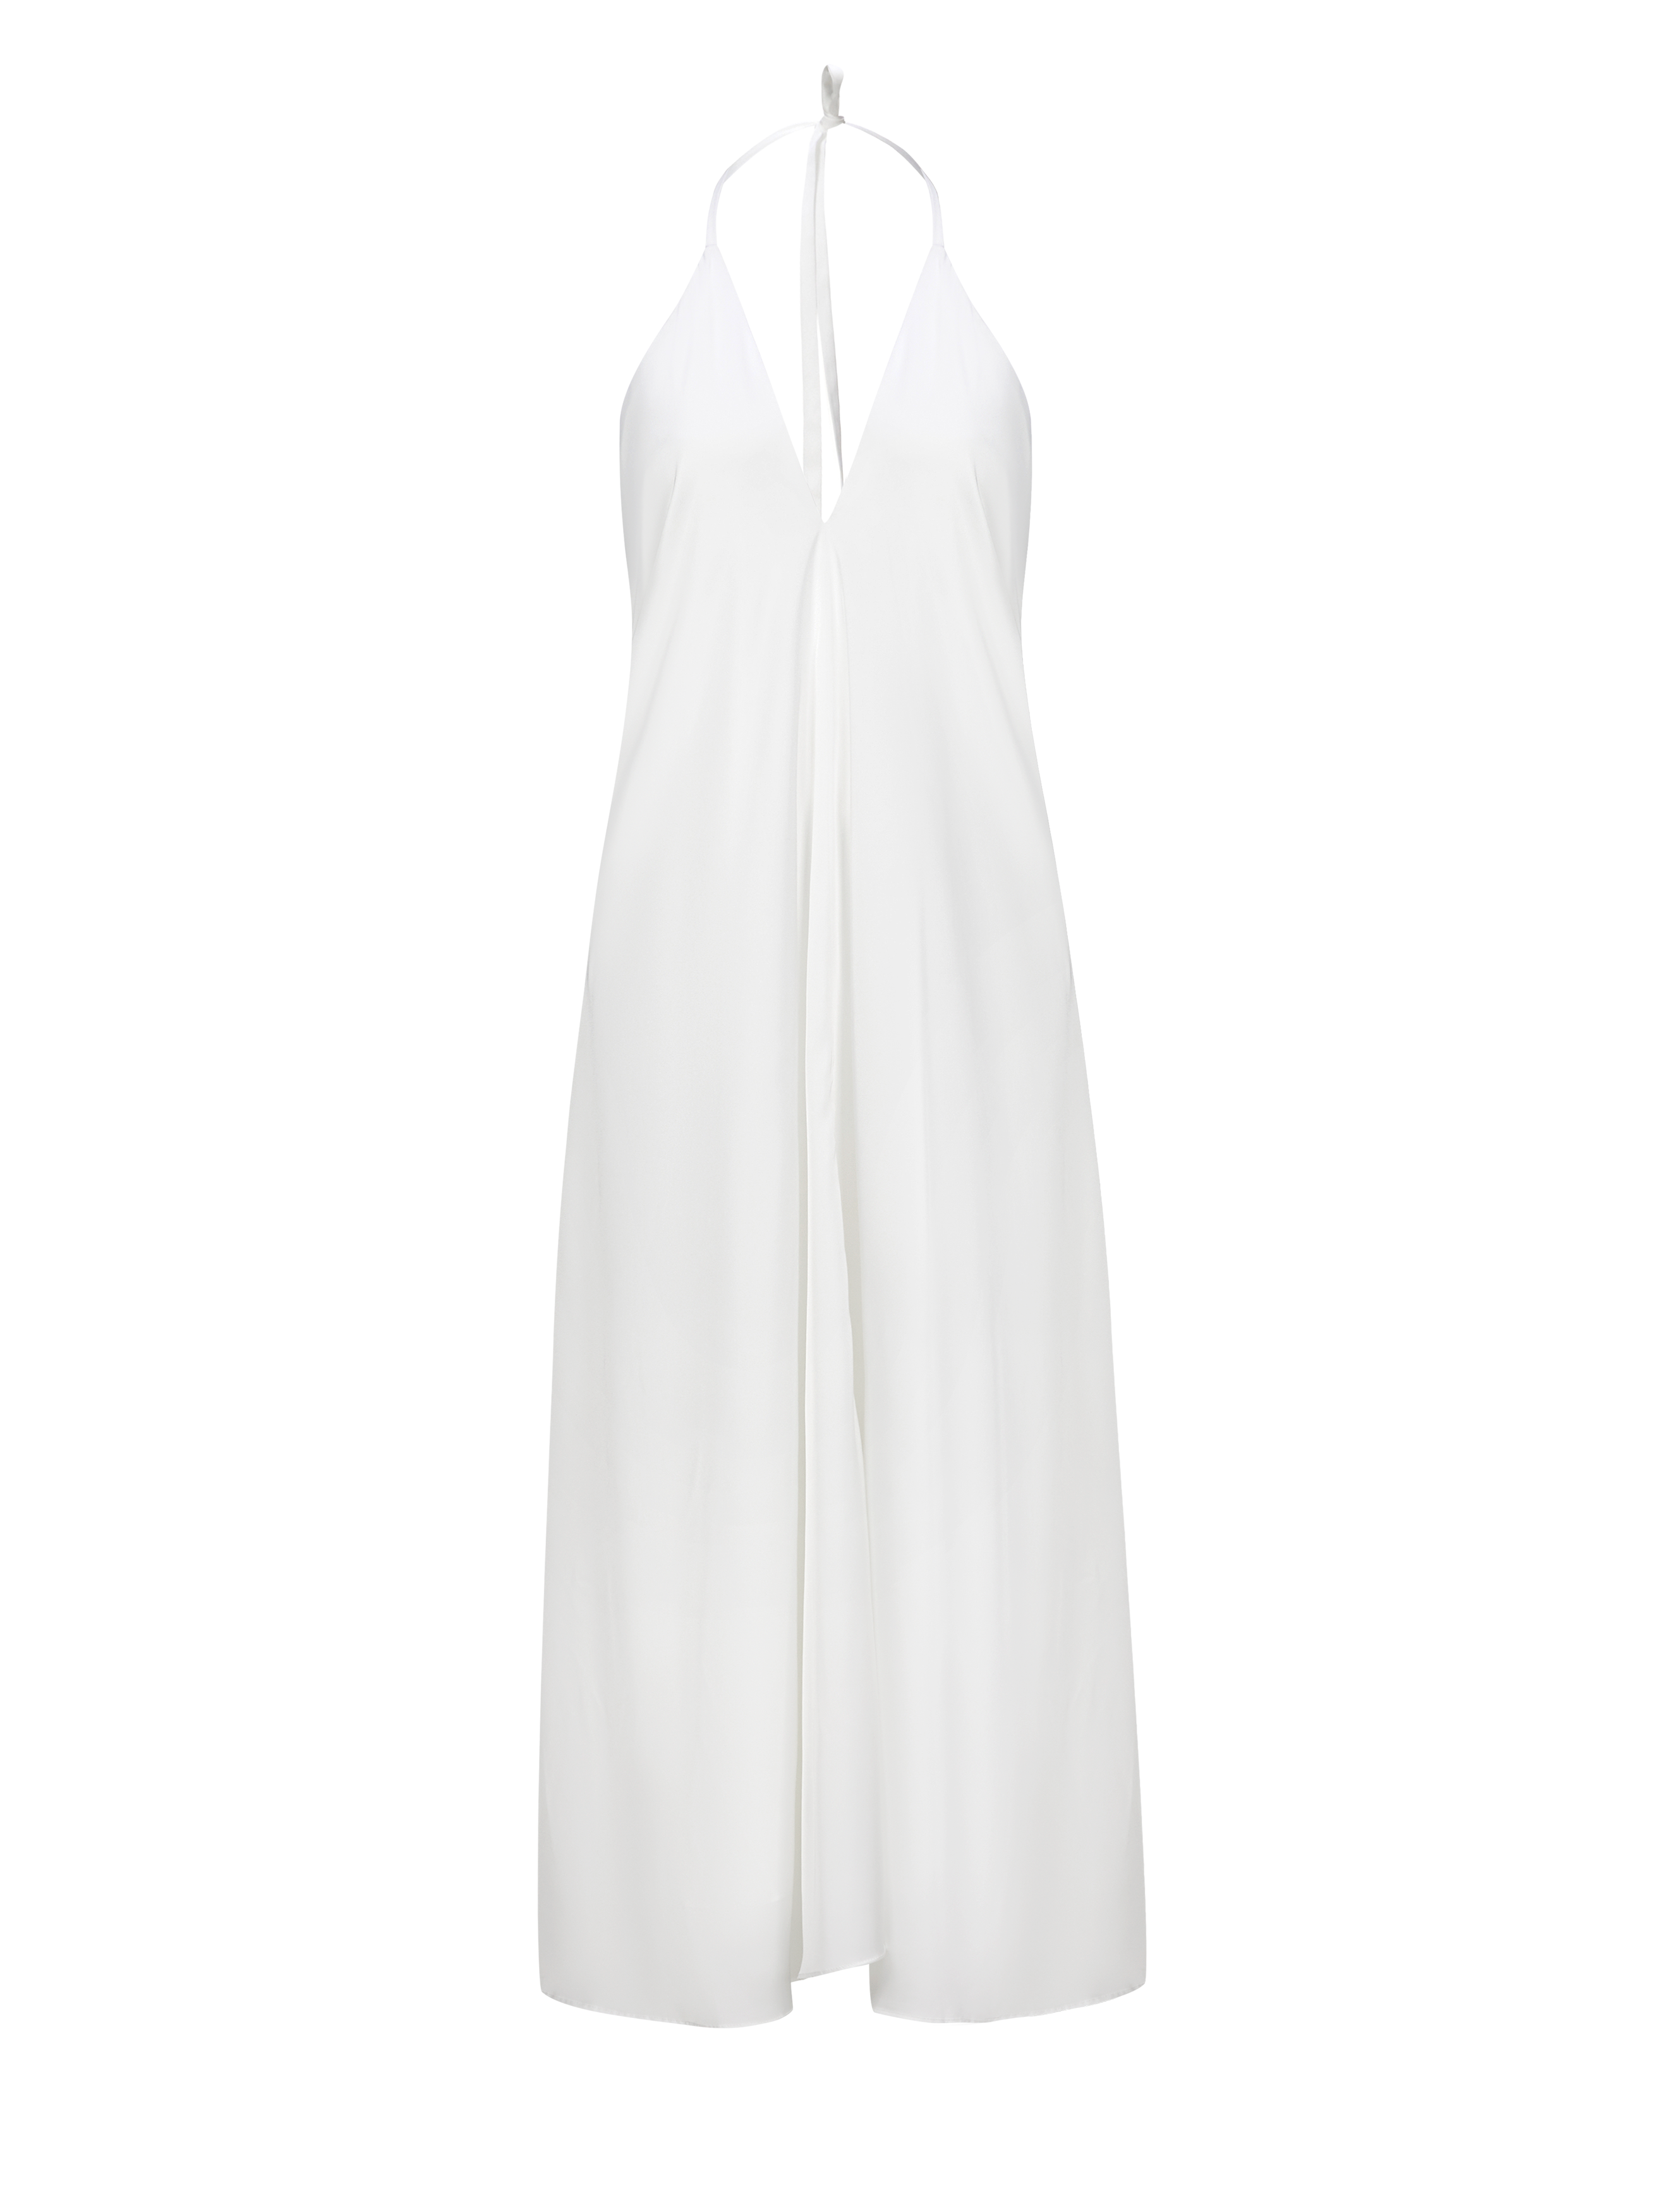 Glossy White Slip Dress